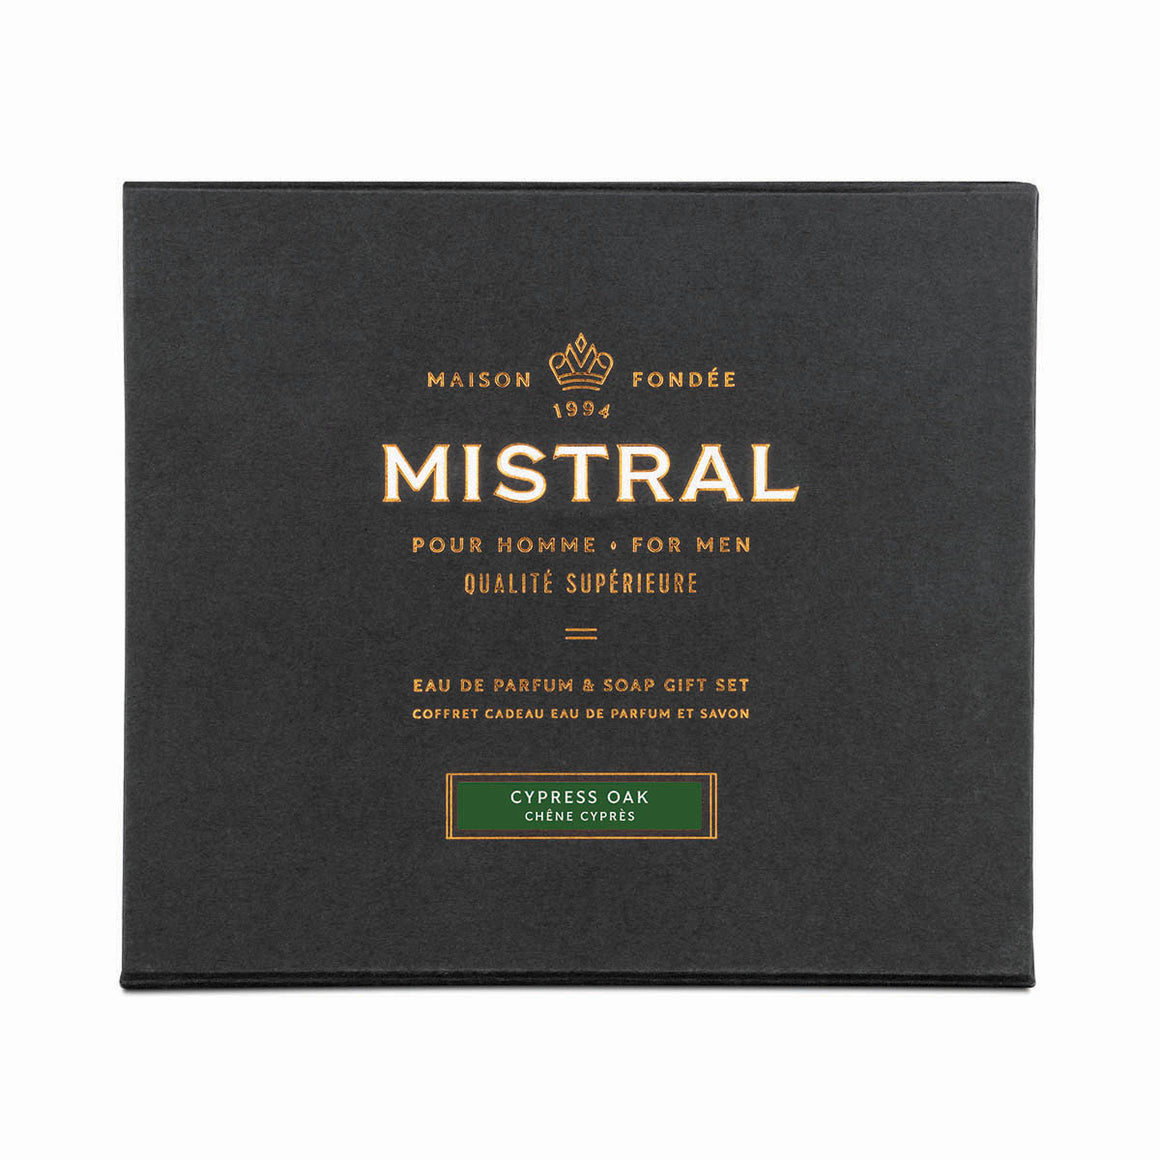 Cypress Oak Eau de Parfum & Bar Soap Gift Set